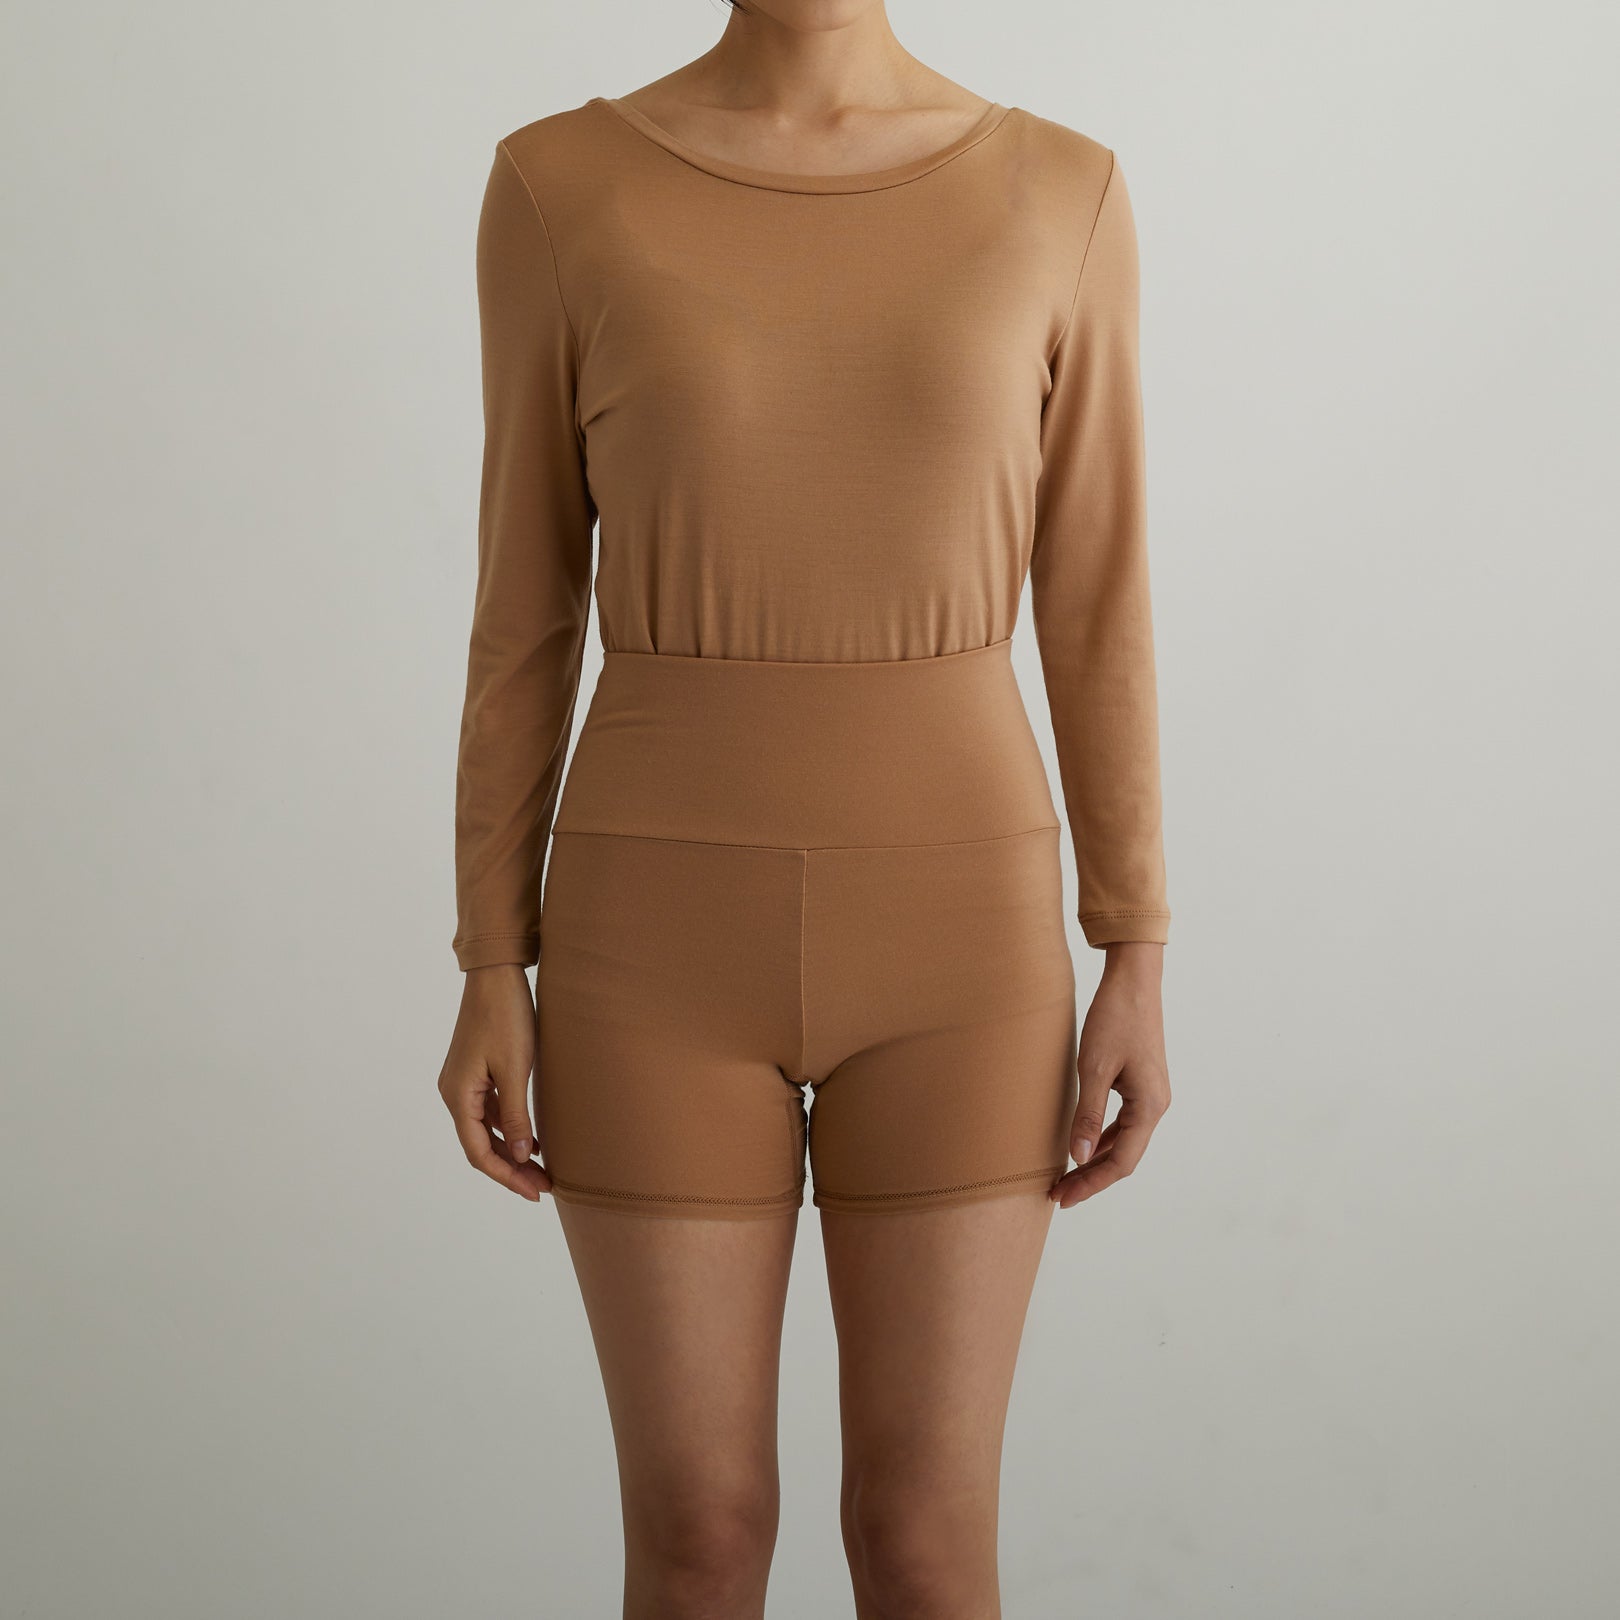 100% Merino Wool Jersey High Waist Shorts in Camel (2022 model)